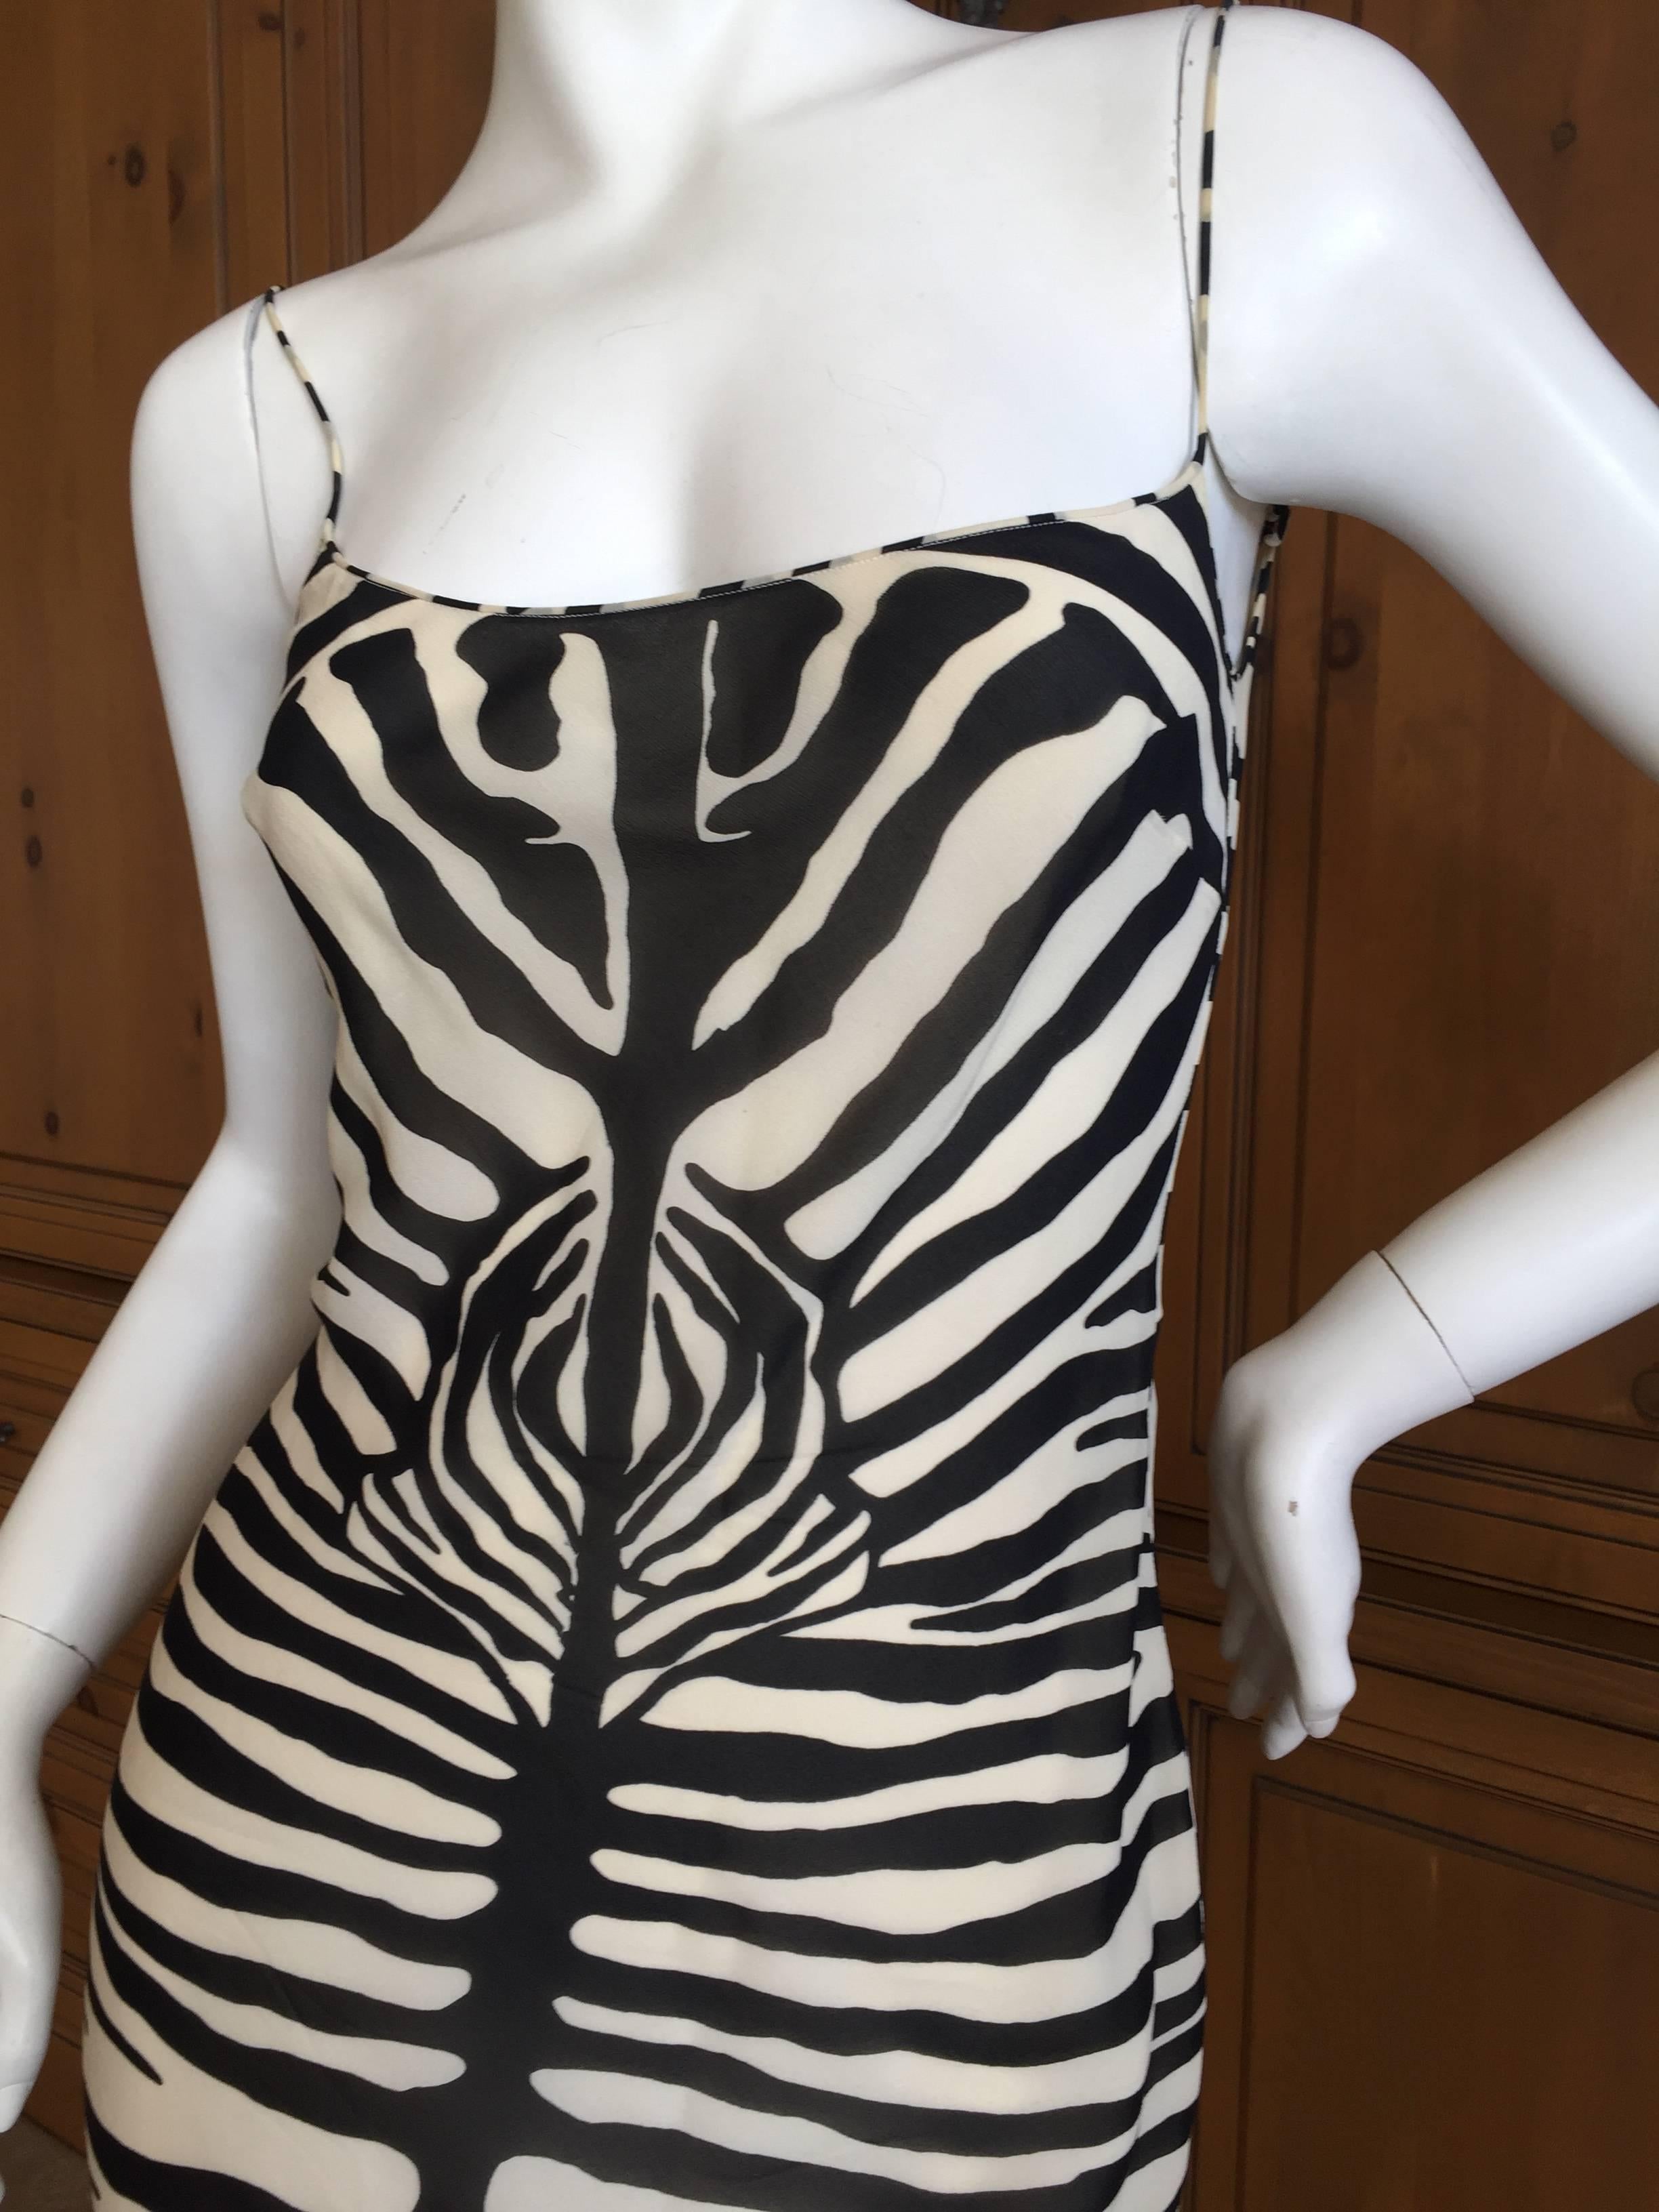 Beautiful bias cut silk zebra pattern dress from John Galliano, circa 1990's.
So simple and sweet.
Size 36
Bust 36